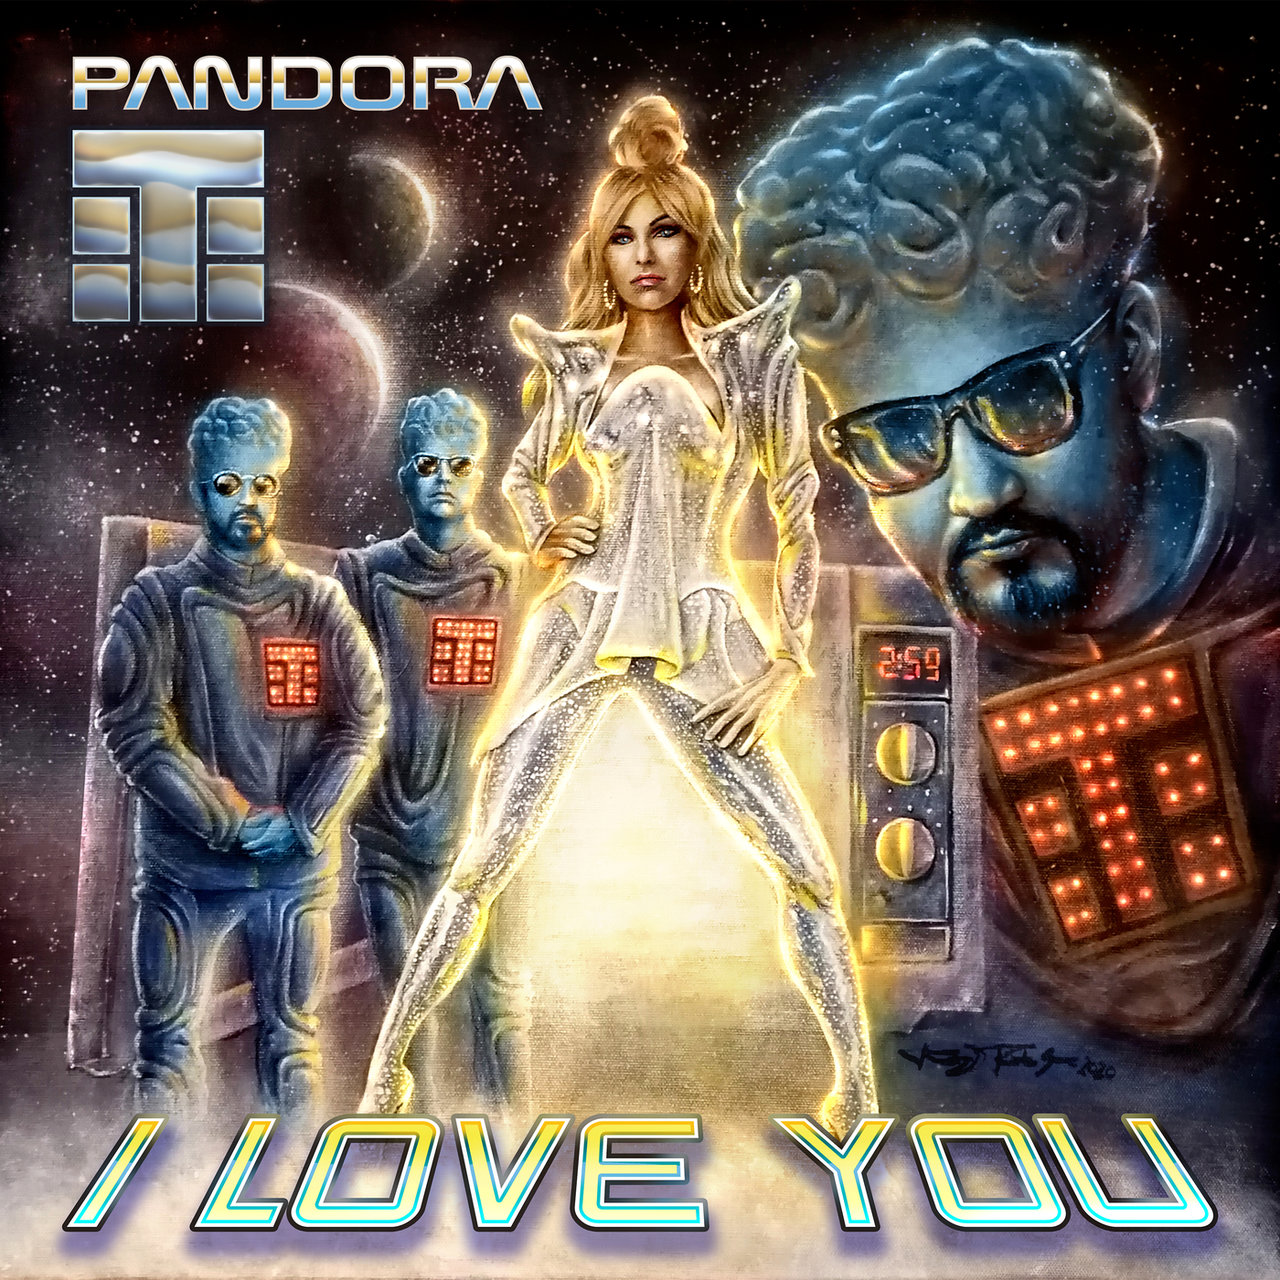 Teflon Brothers & Pandora — I Love You cover artwork